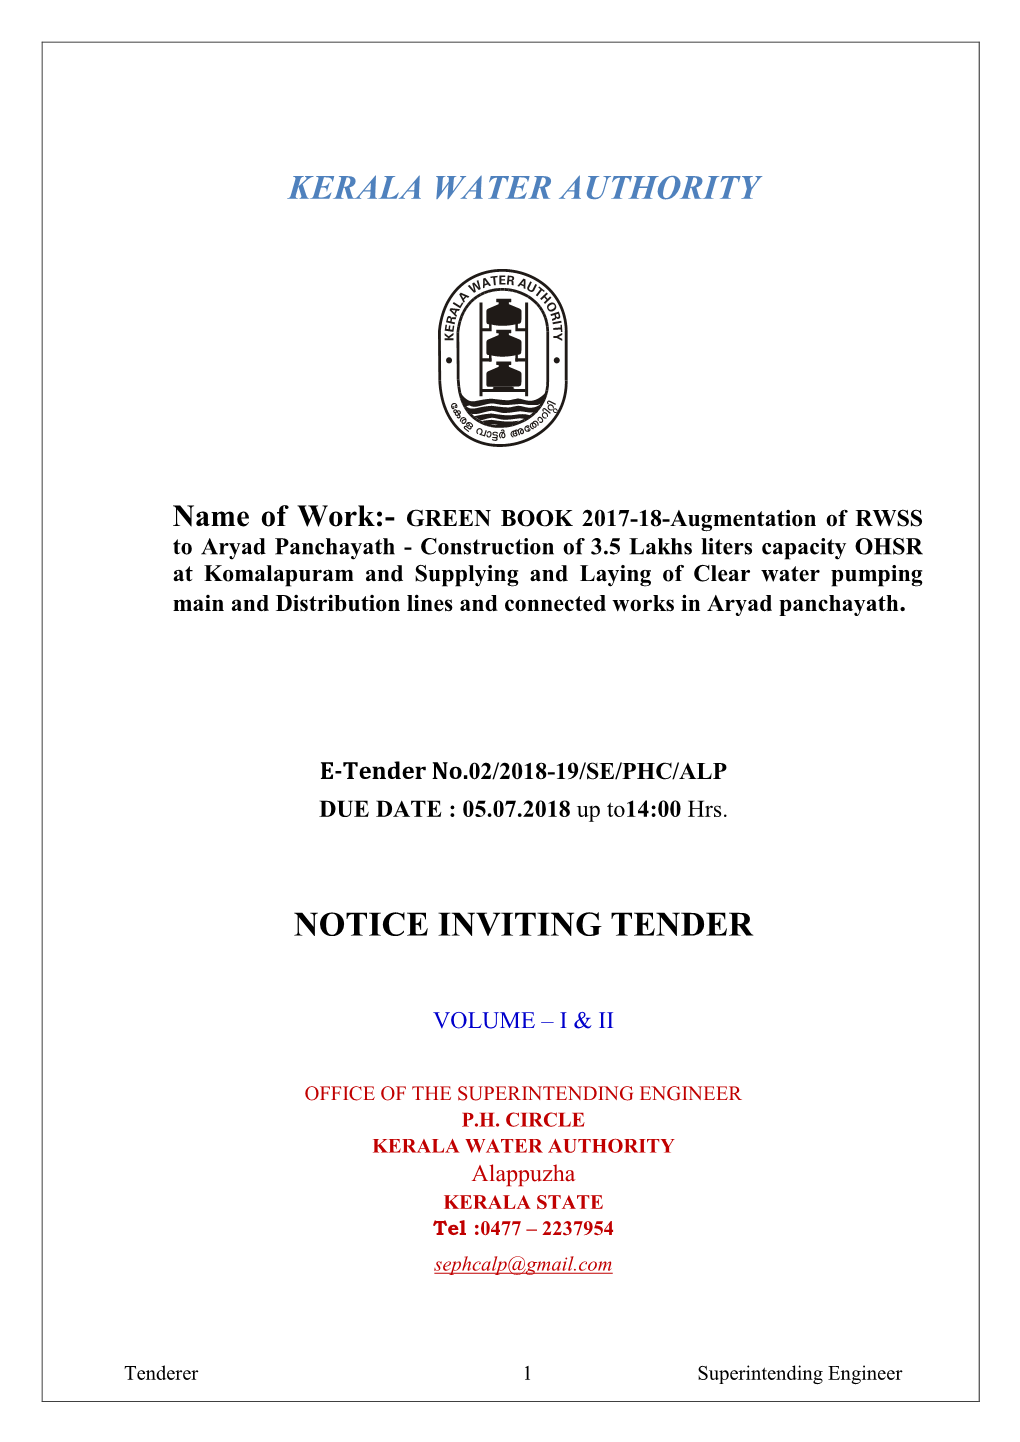 Kerala Water Authority Notice Inviting Tender